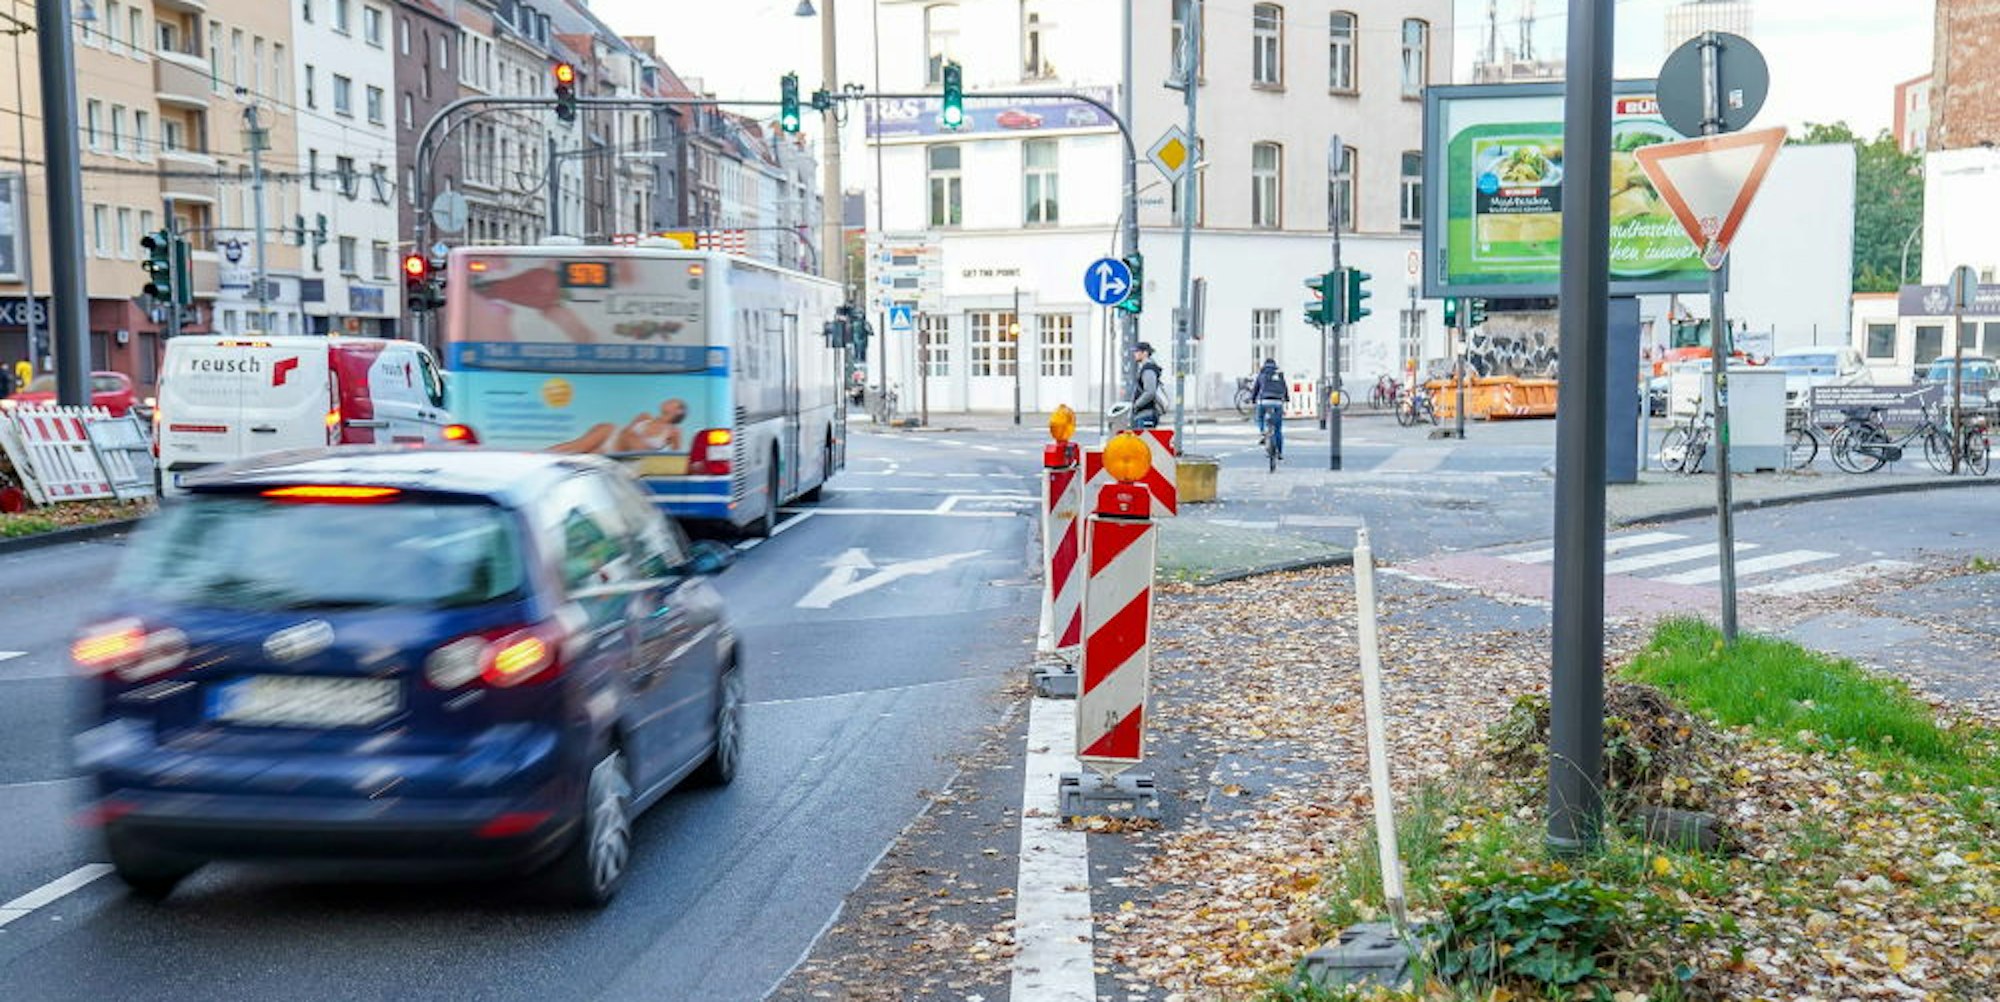 Kein Abbiegen mehr für Autos: An der Ecke Luxemburger Straße/Eifelwall ist der Rechtsabbieger gesperrt.